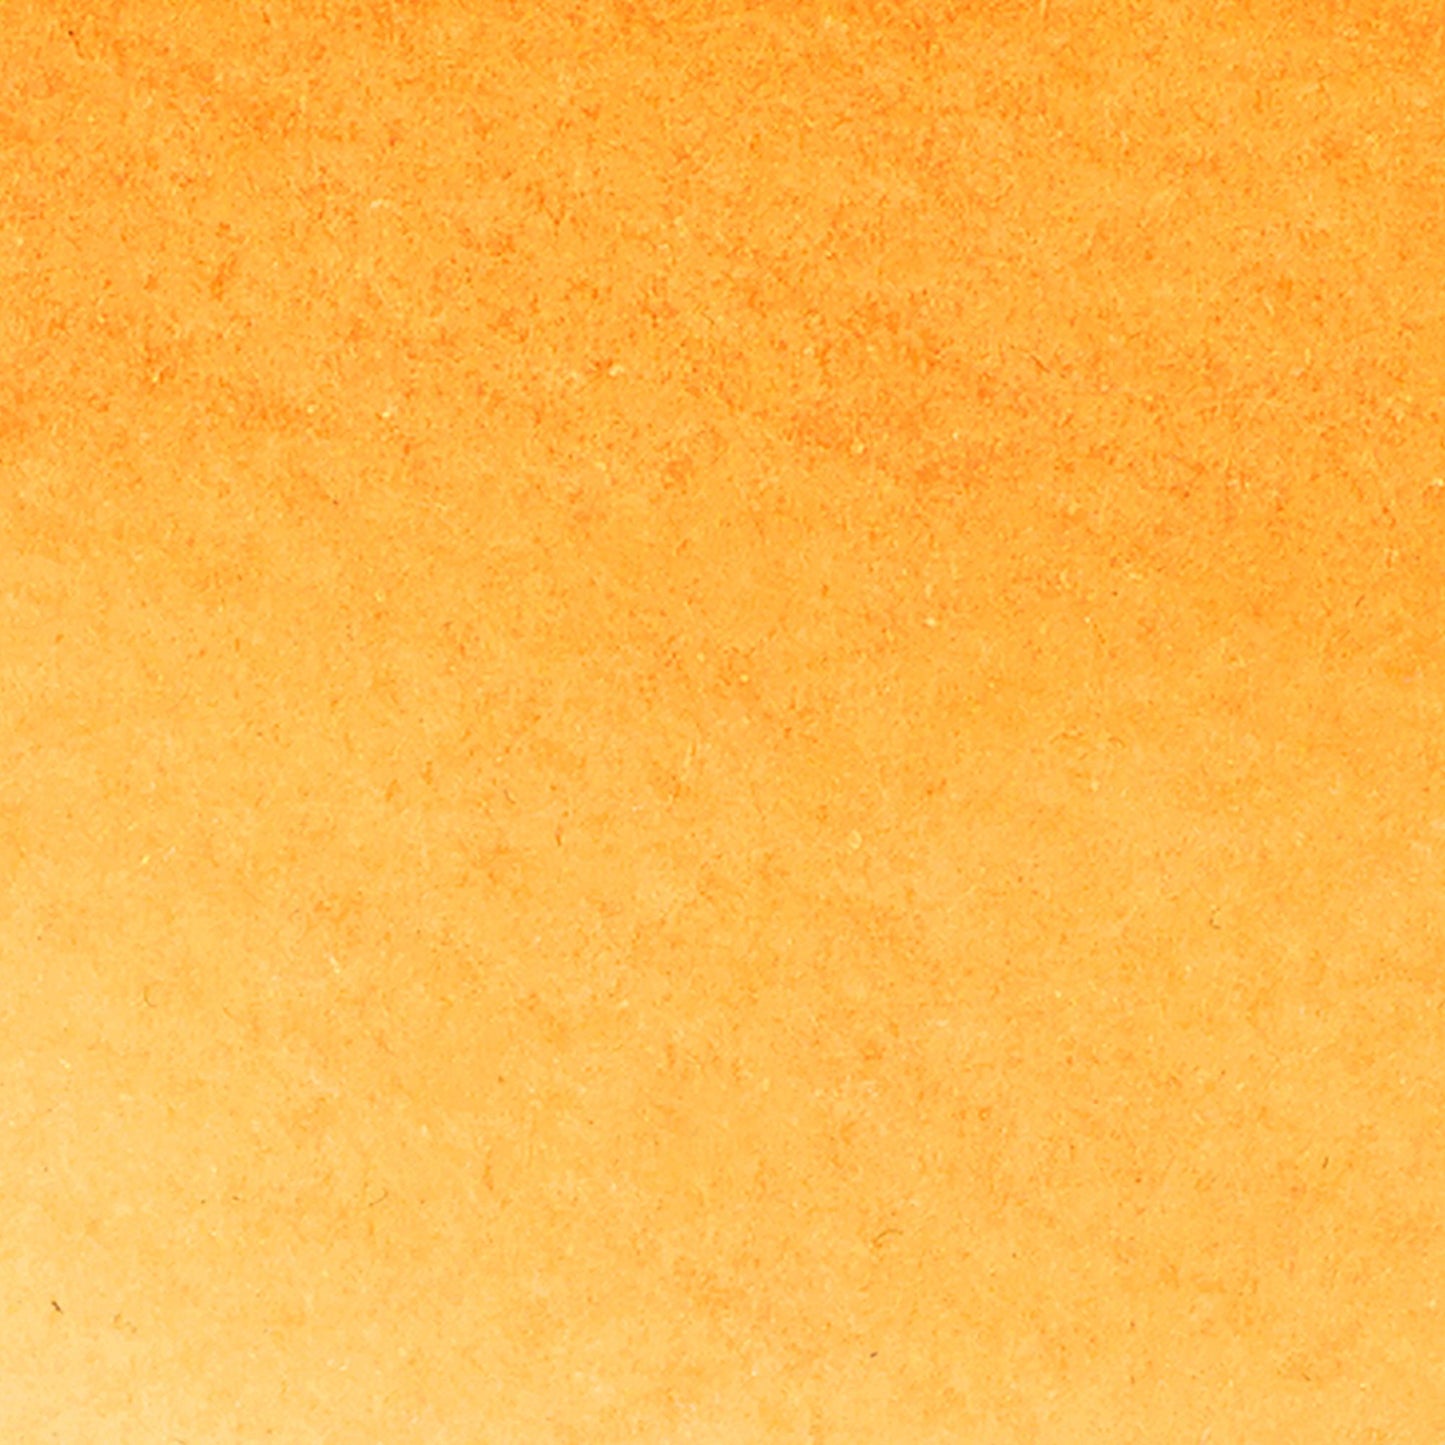 W & N Water Colour Marker Cadmium Orange Hue - theartshop.com.au